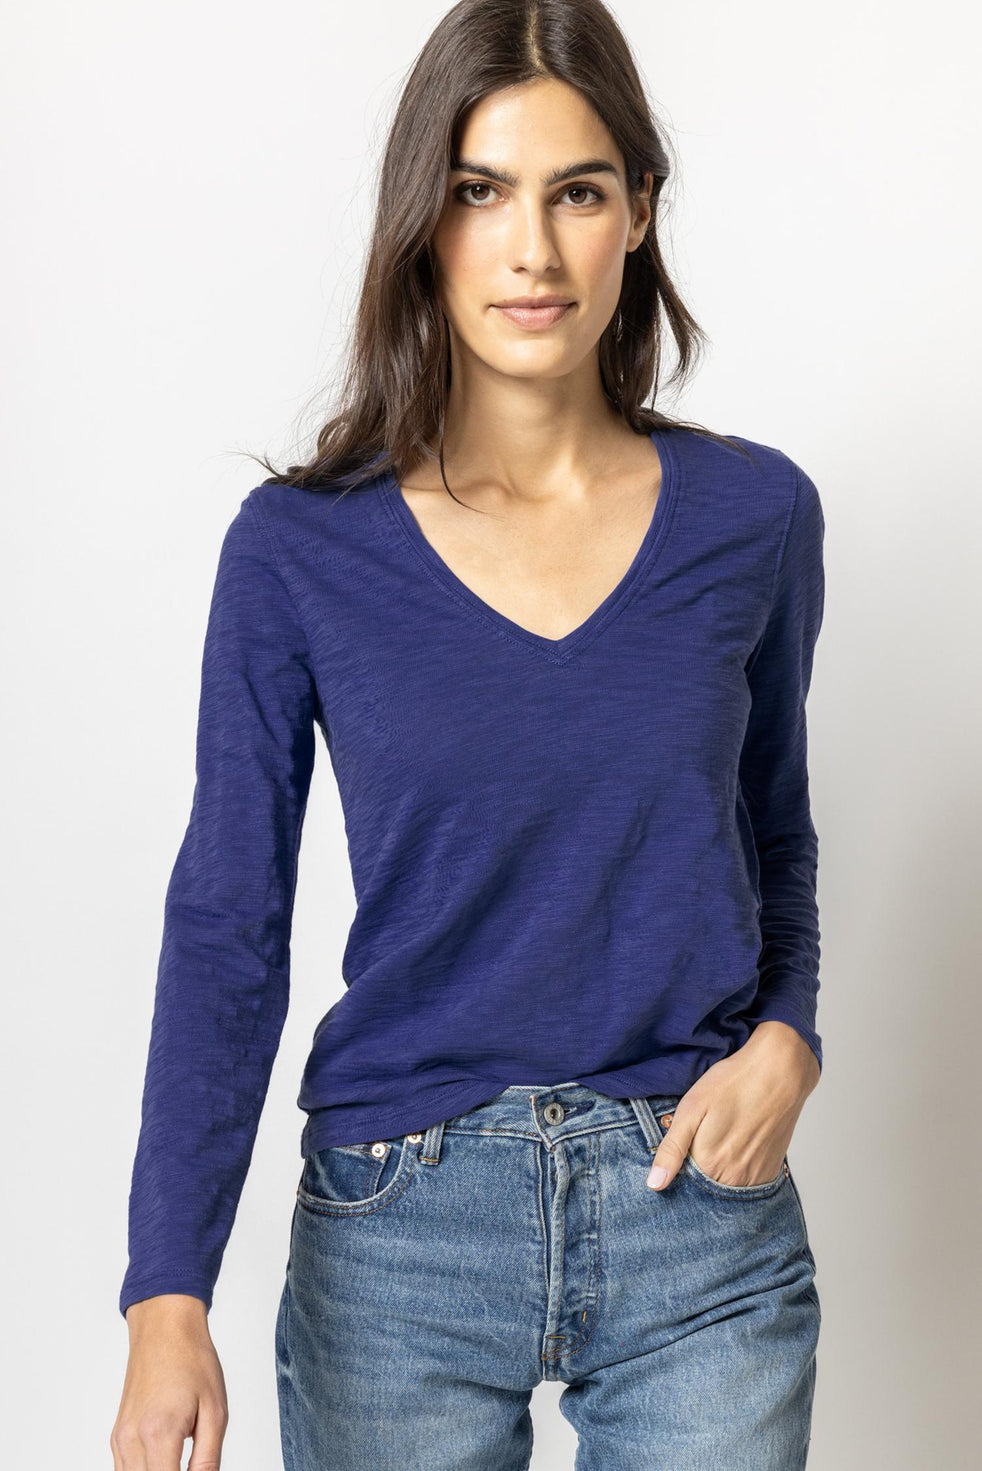 Women's Tops, Tees & Blouses | 100% Cotton Shirts | Classic T Shirts